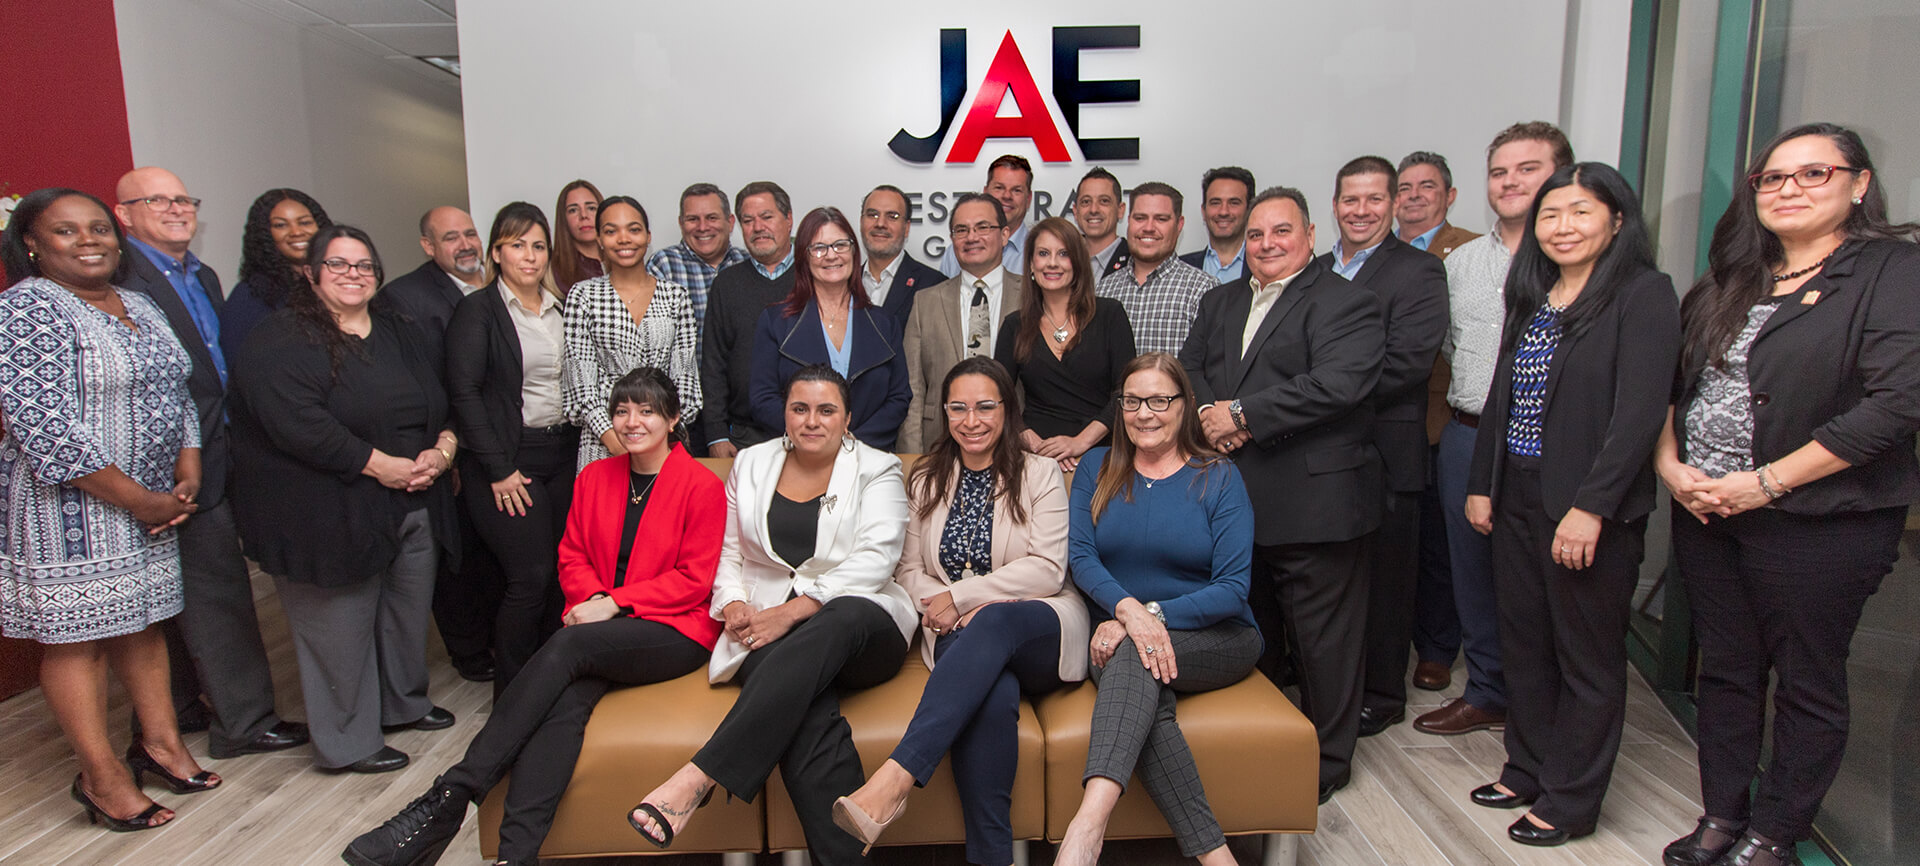 Potrait photo of JAE Employees